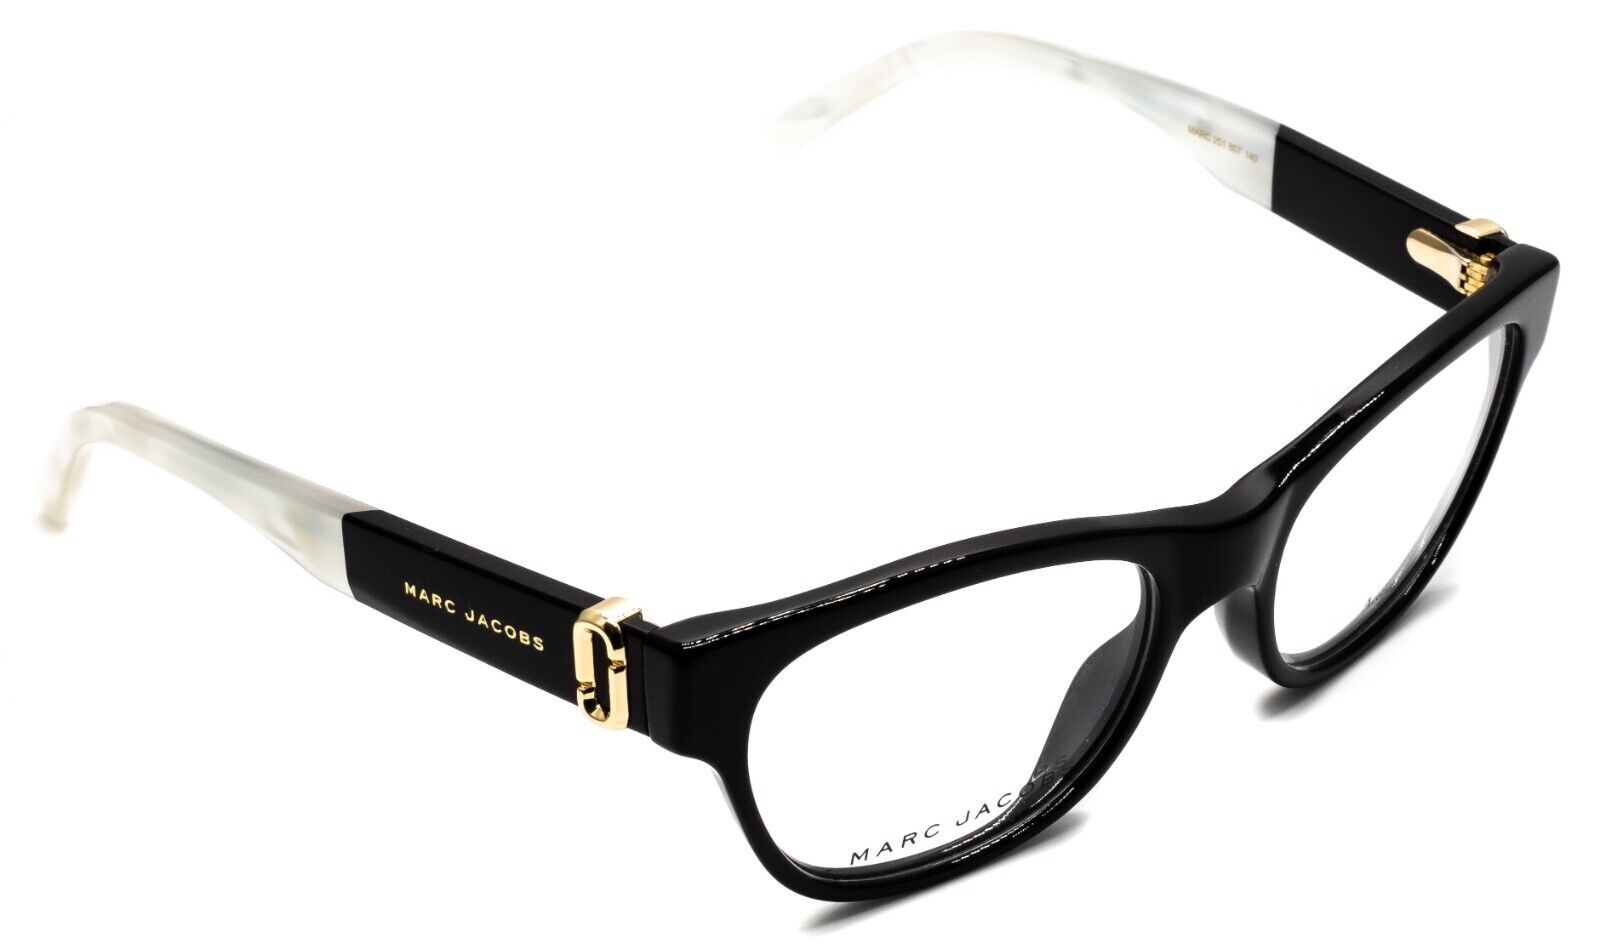 LOUIS MARCEL LMC139 C1 51mm Eyewear FRAMES RX Optical Eyeglasses Glasses -  New - GGV Eyewear